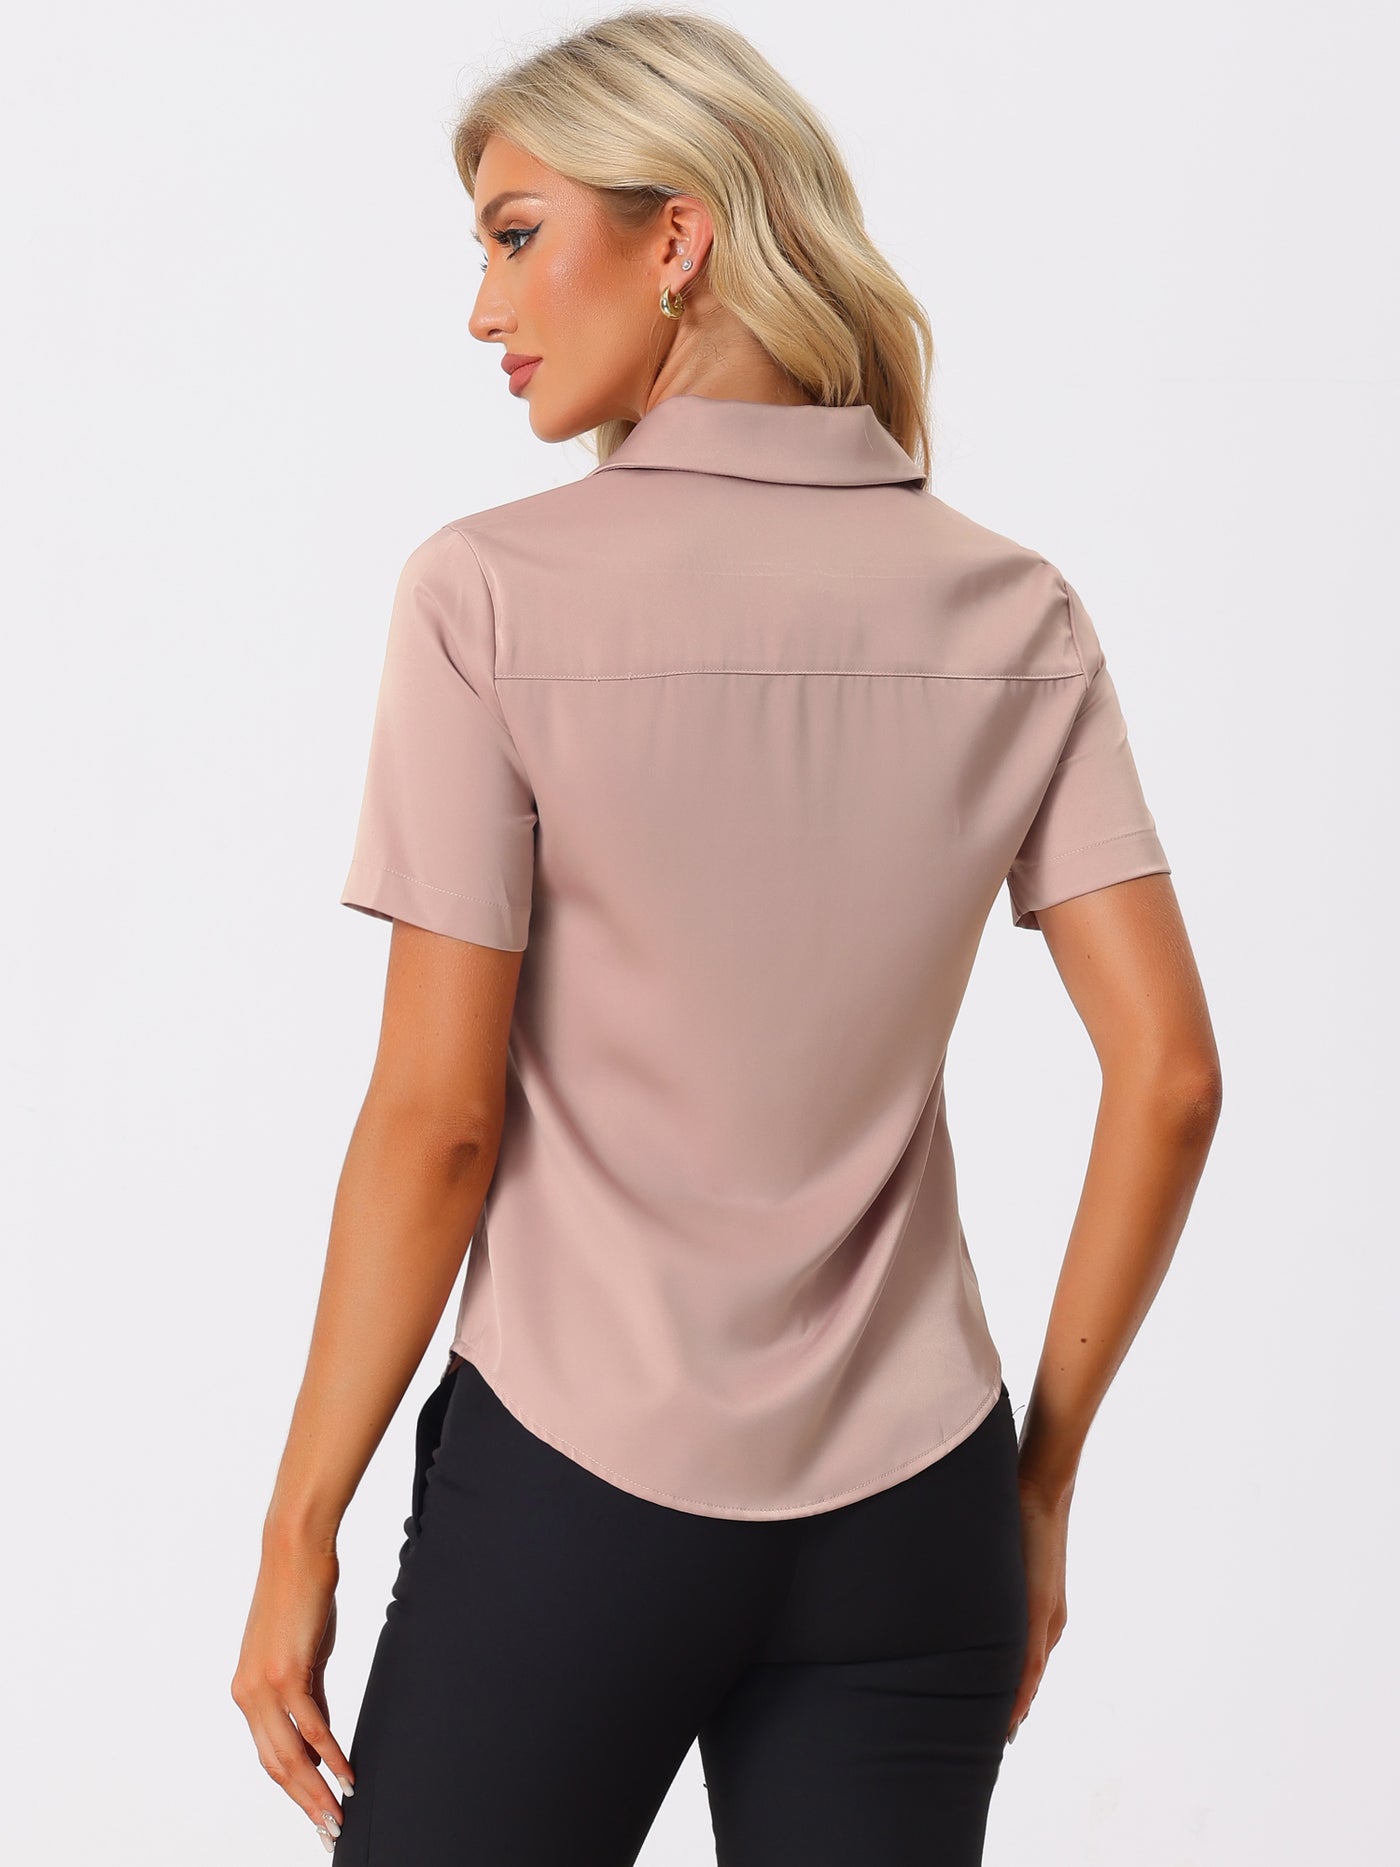 Allegra K Elegant Collar Short Sleeve Work Office Button Down Satin Blouse Shirt